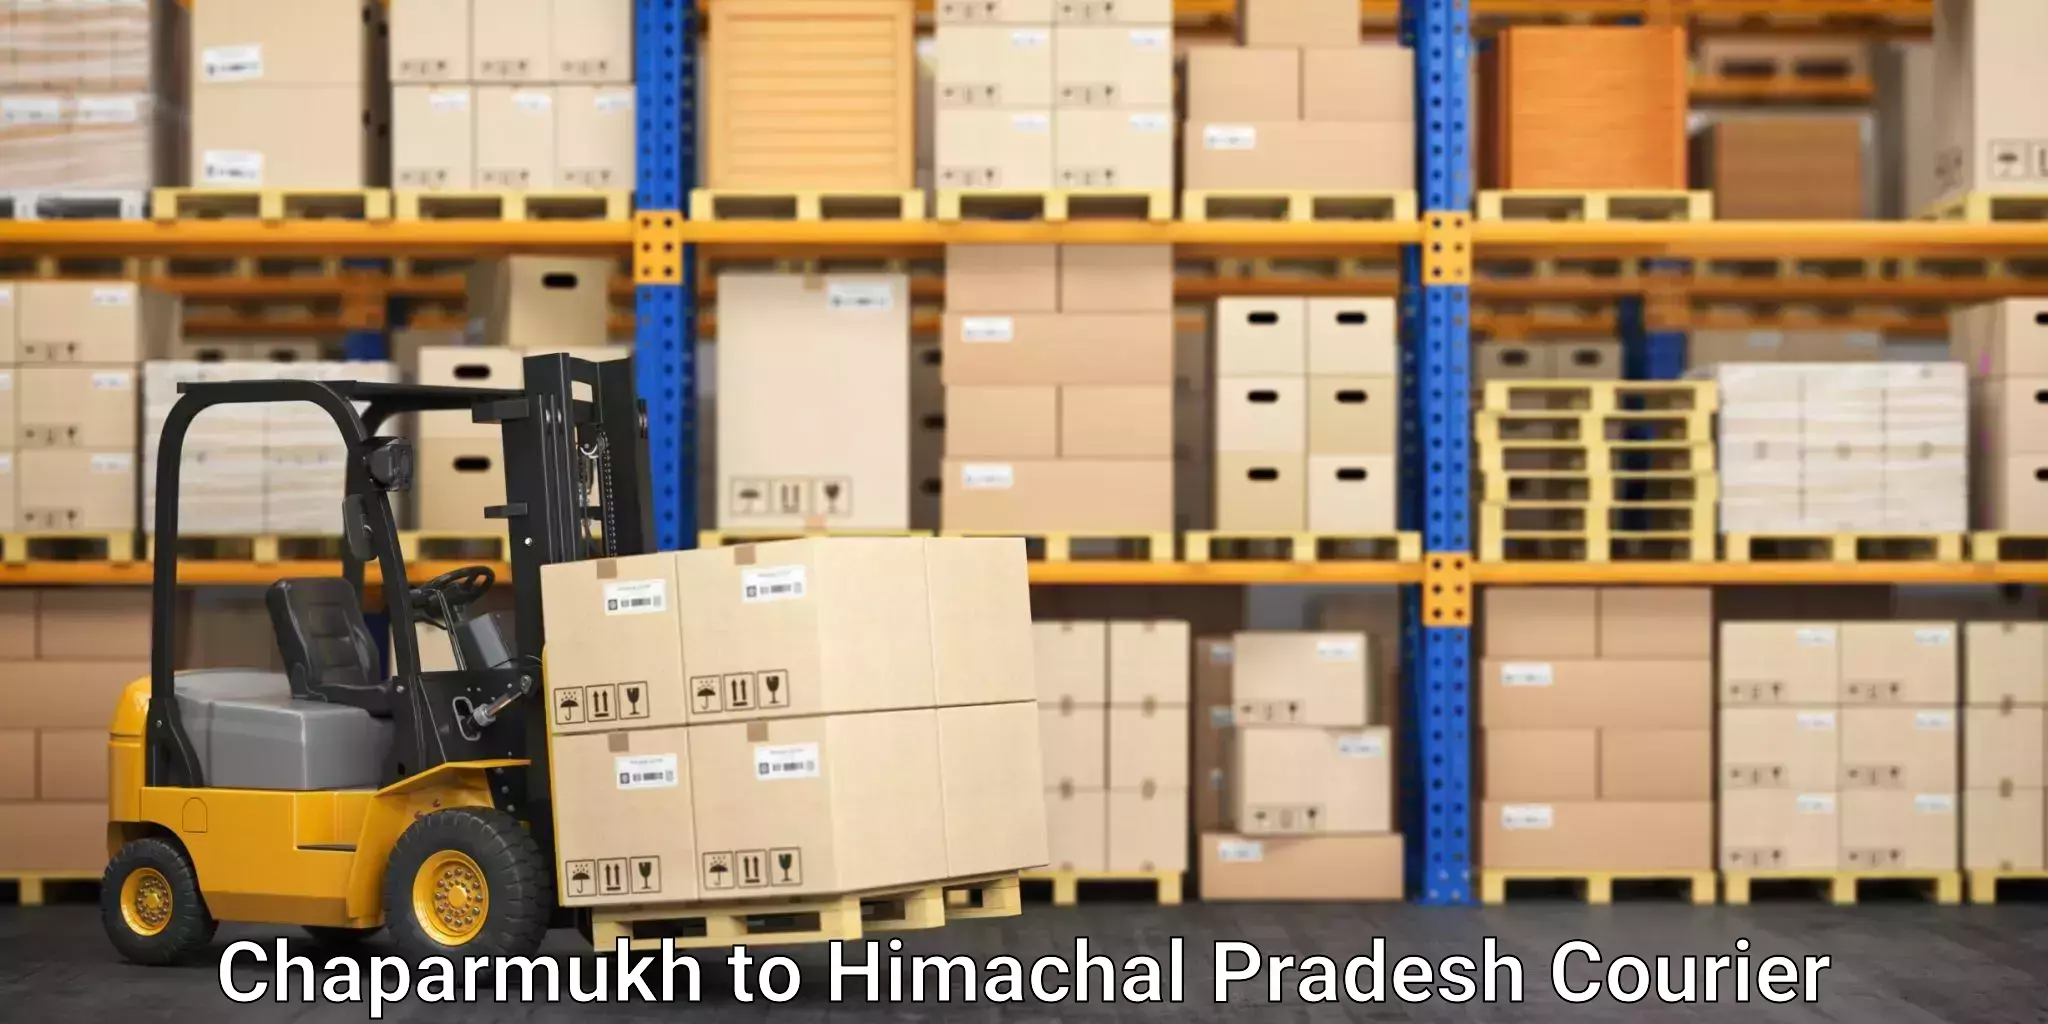 Efficient order fulfillment Chaparmukh to Himachal Pradesh